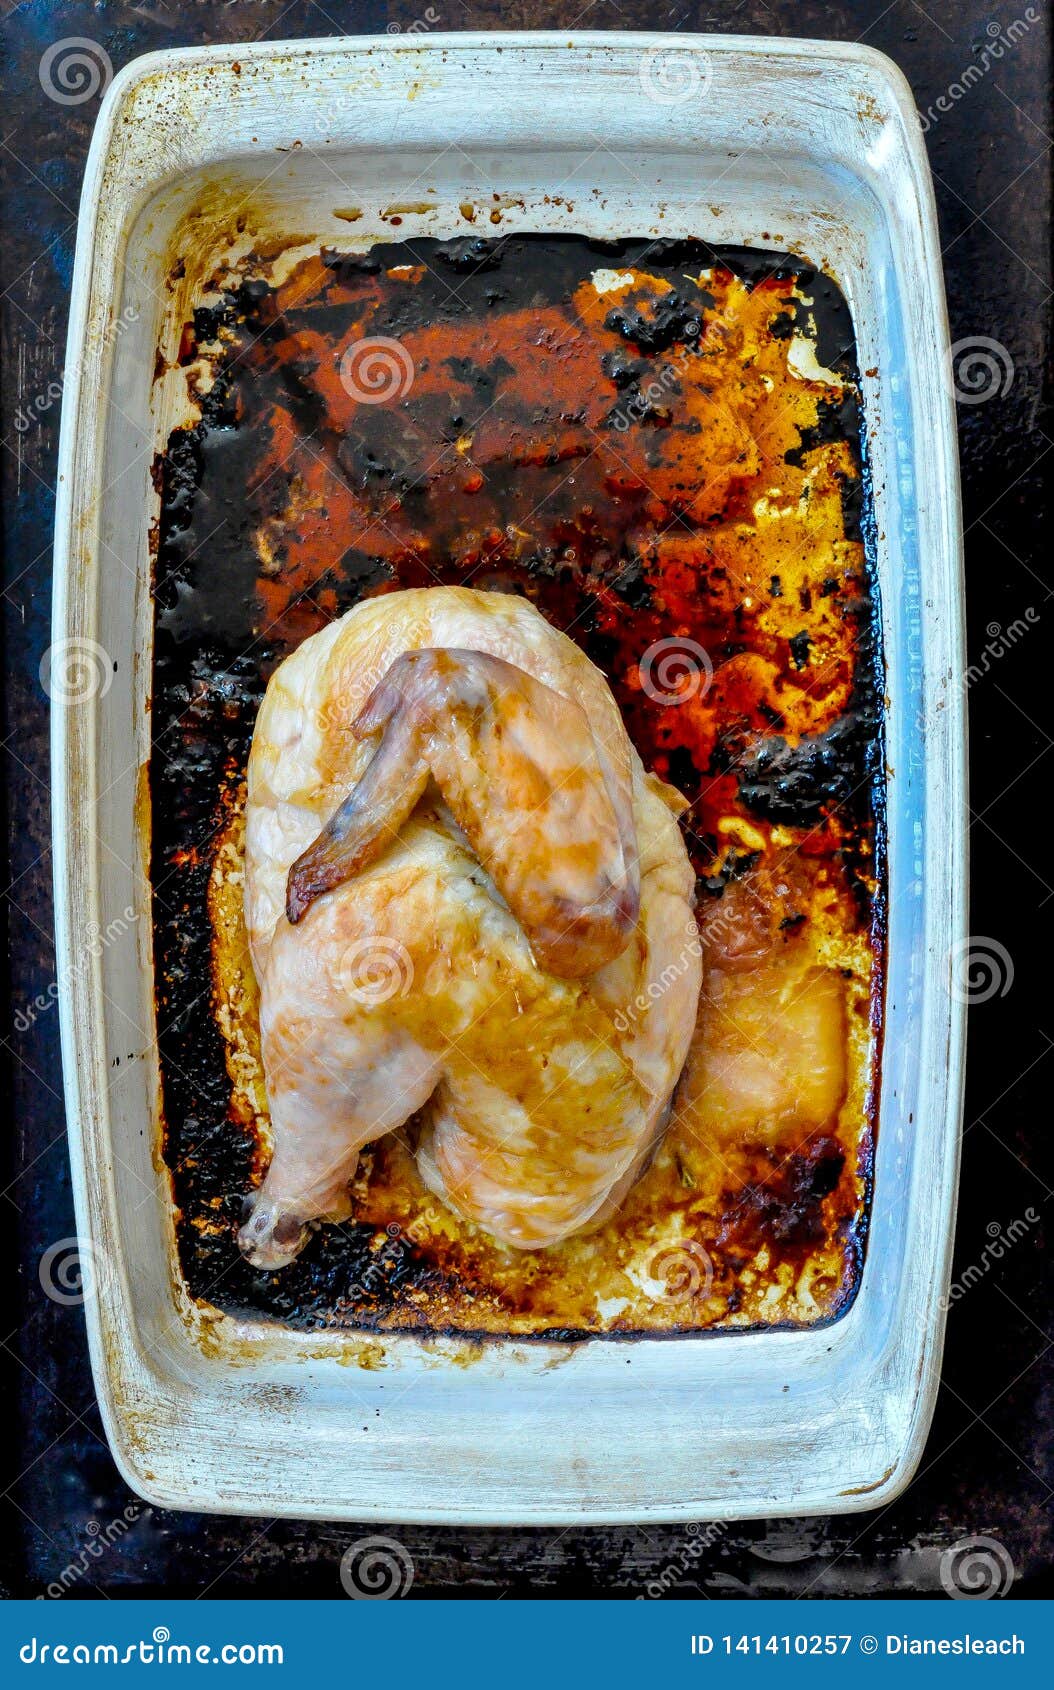 COOK WITH SUSAN Quick Roast Chicken with Mustard & Garlic